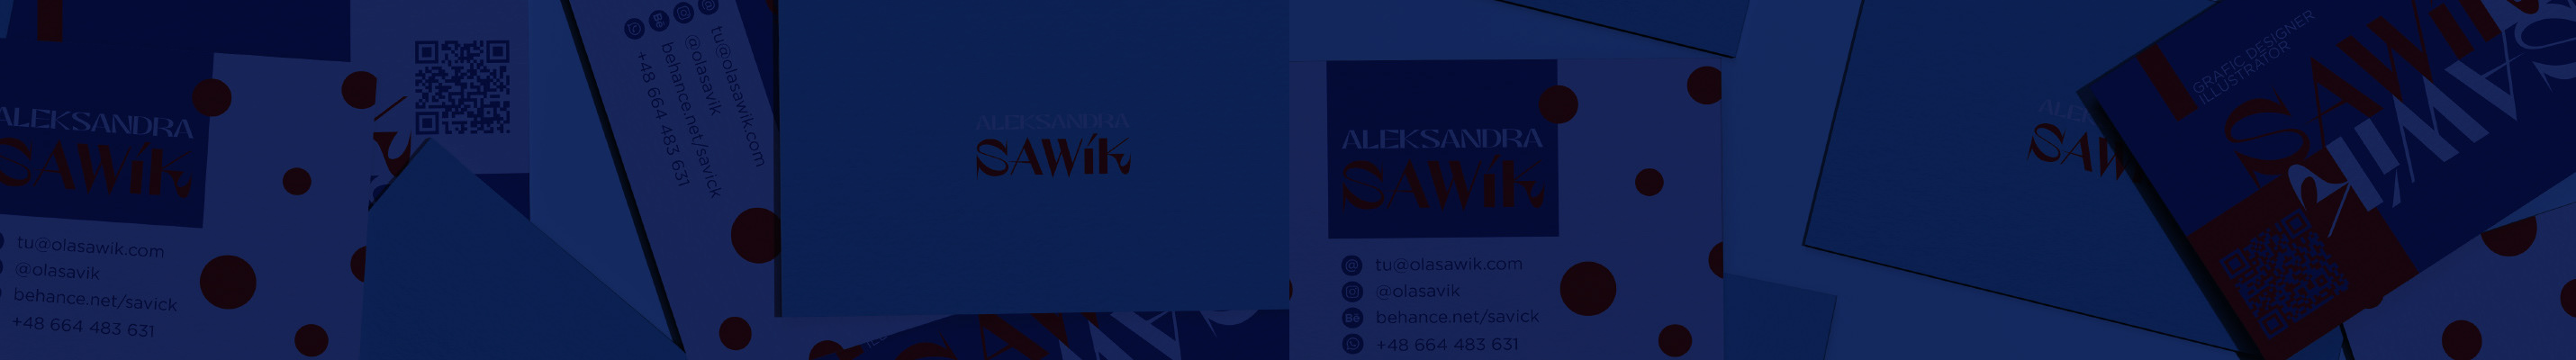 Aleksandra Sawiks profilbanner